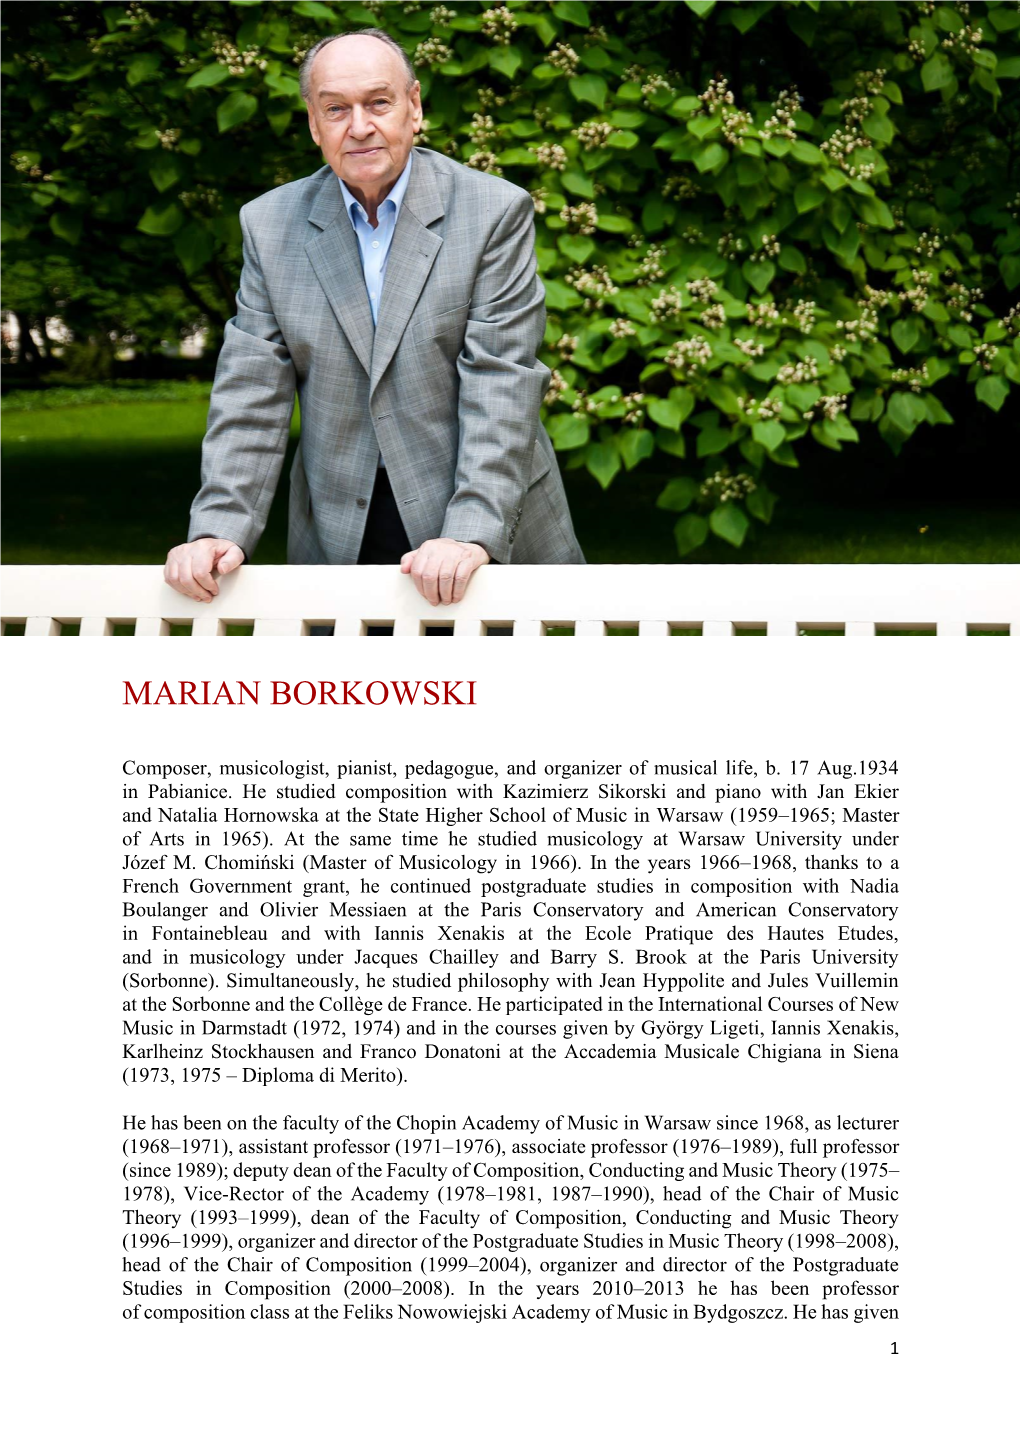 Marian Borkowski